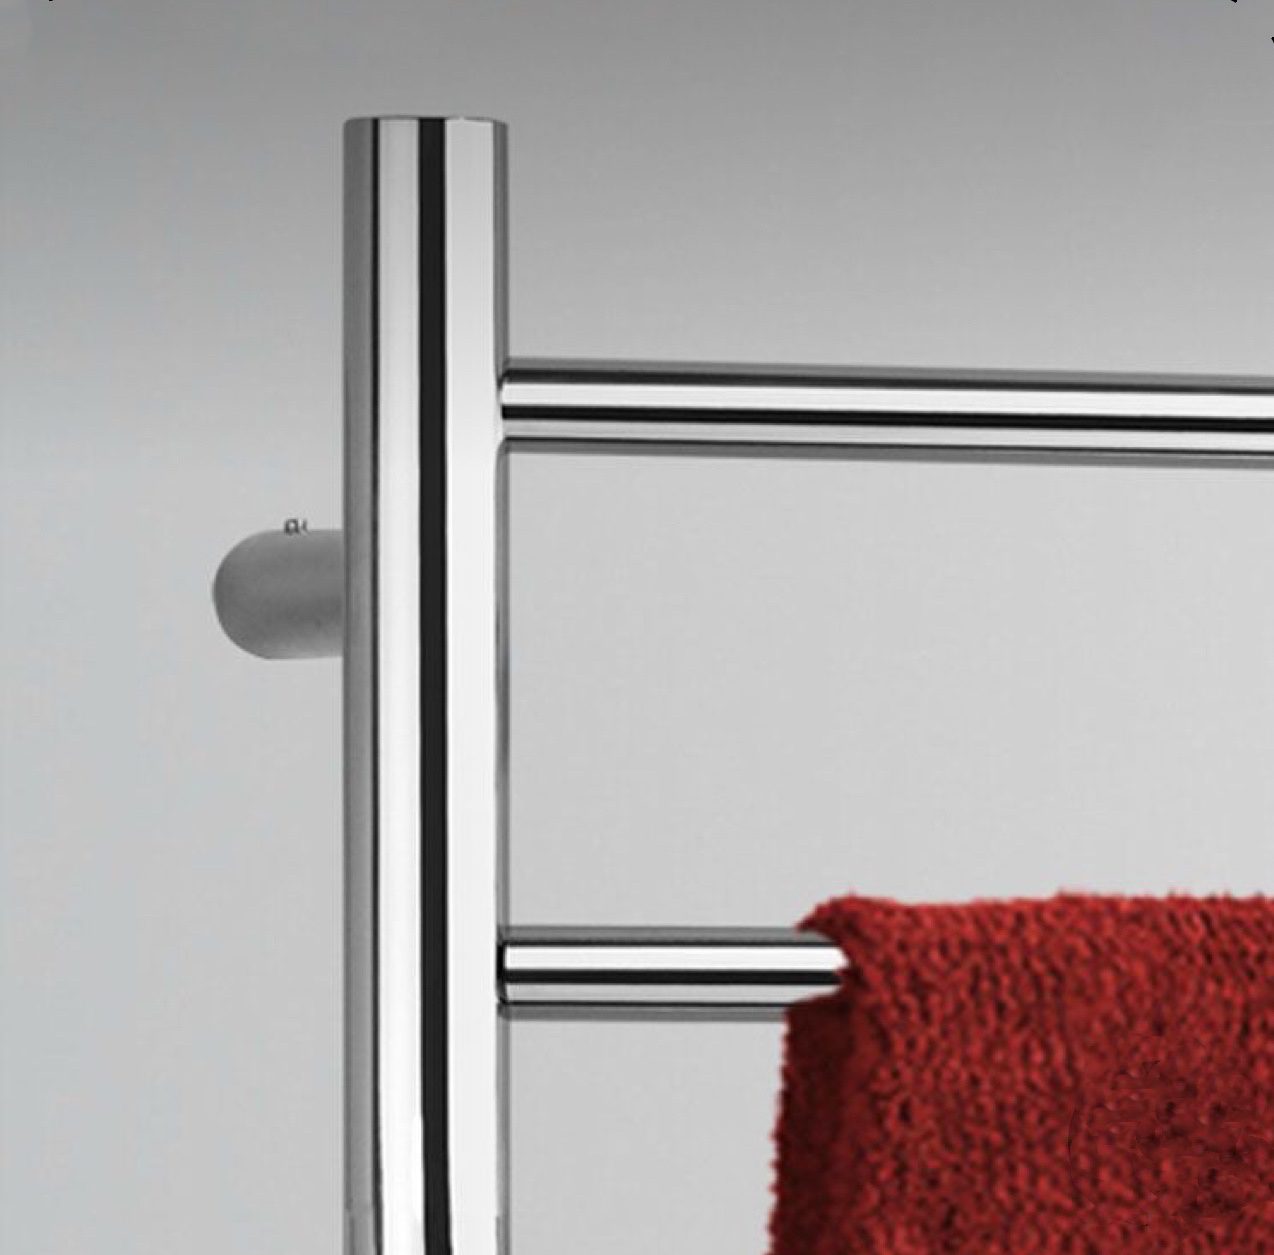 YYY-heated-towel-rail-details.jpg